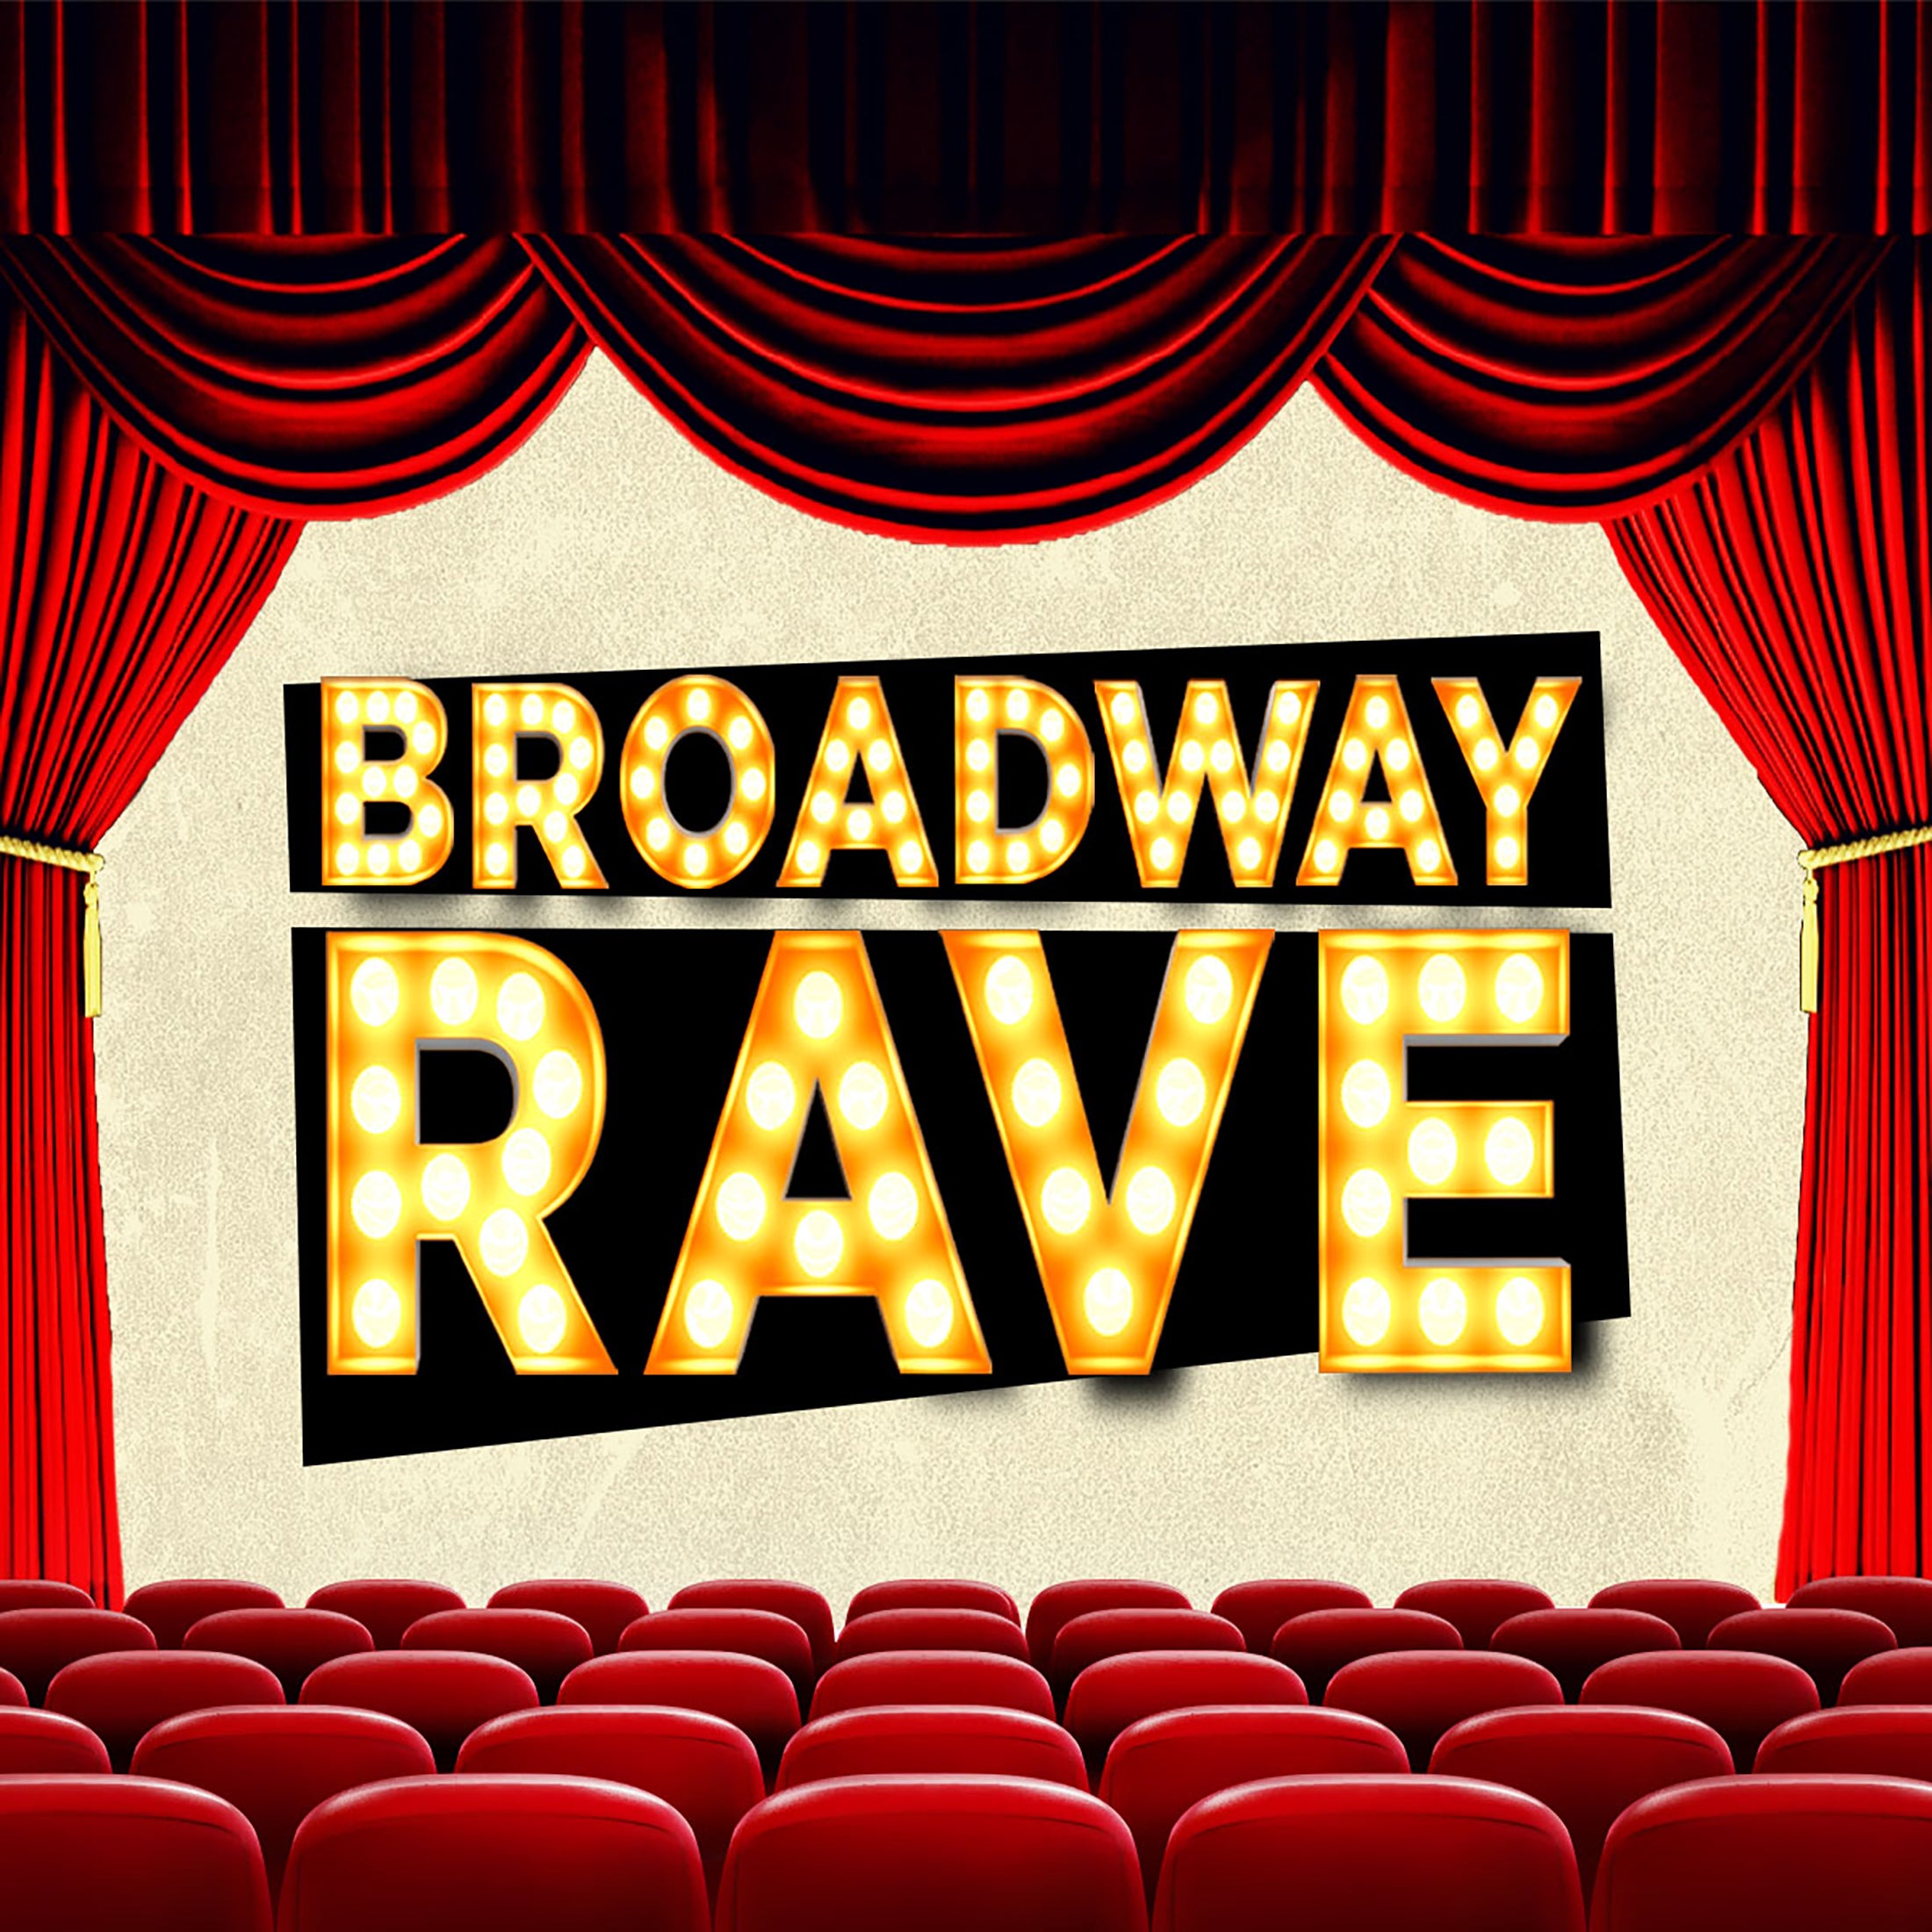 Broadway Rave at 9:30 CLUB